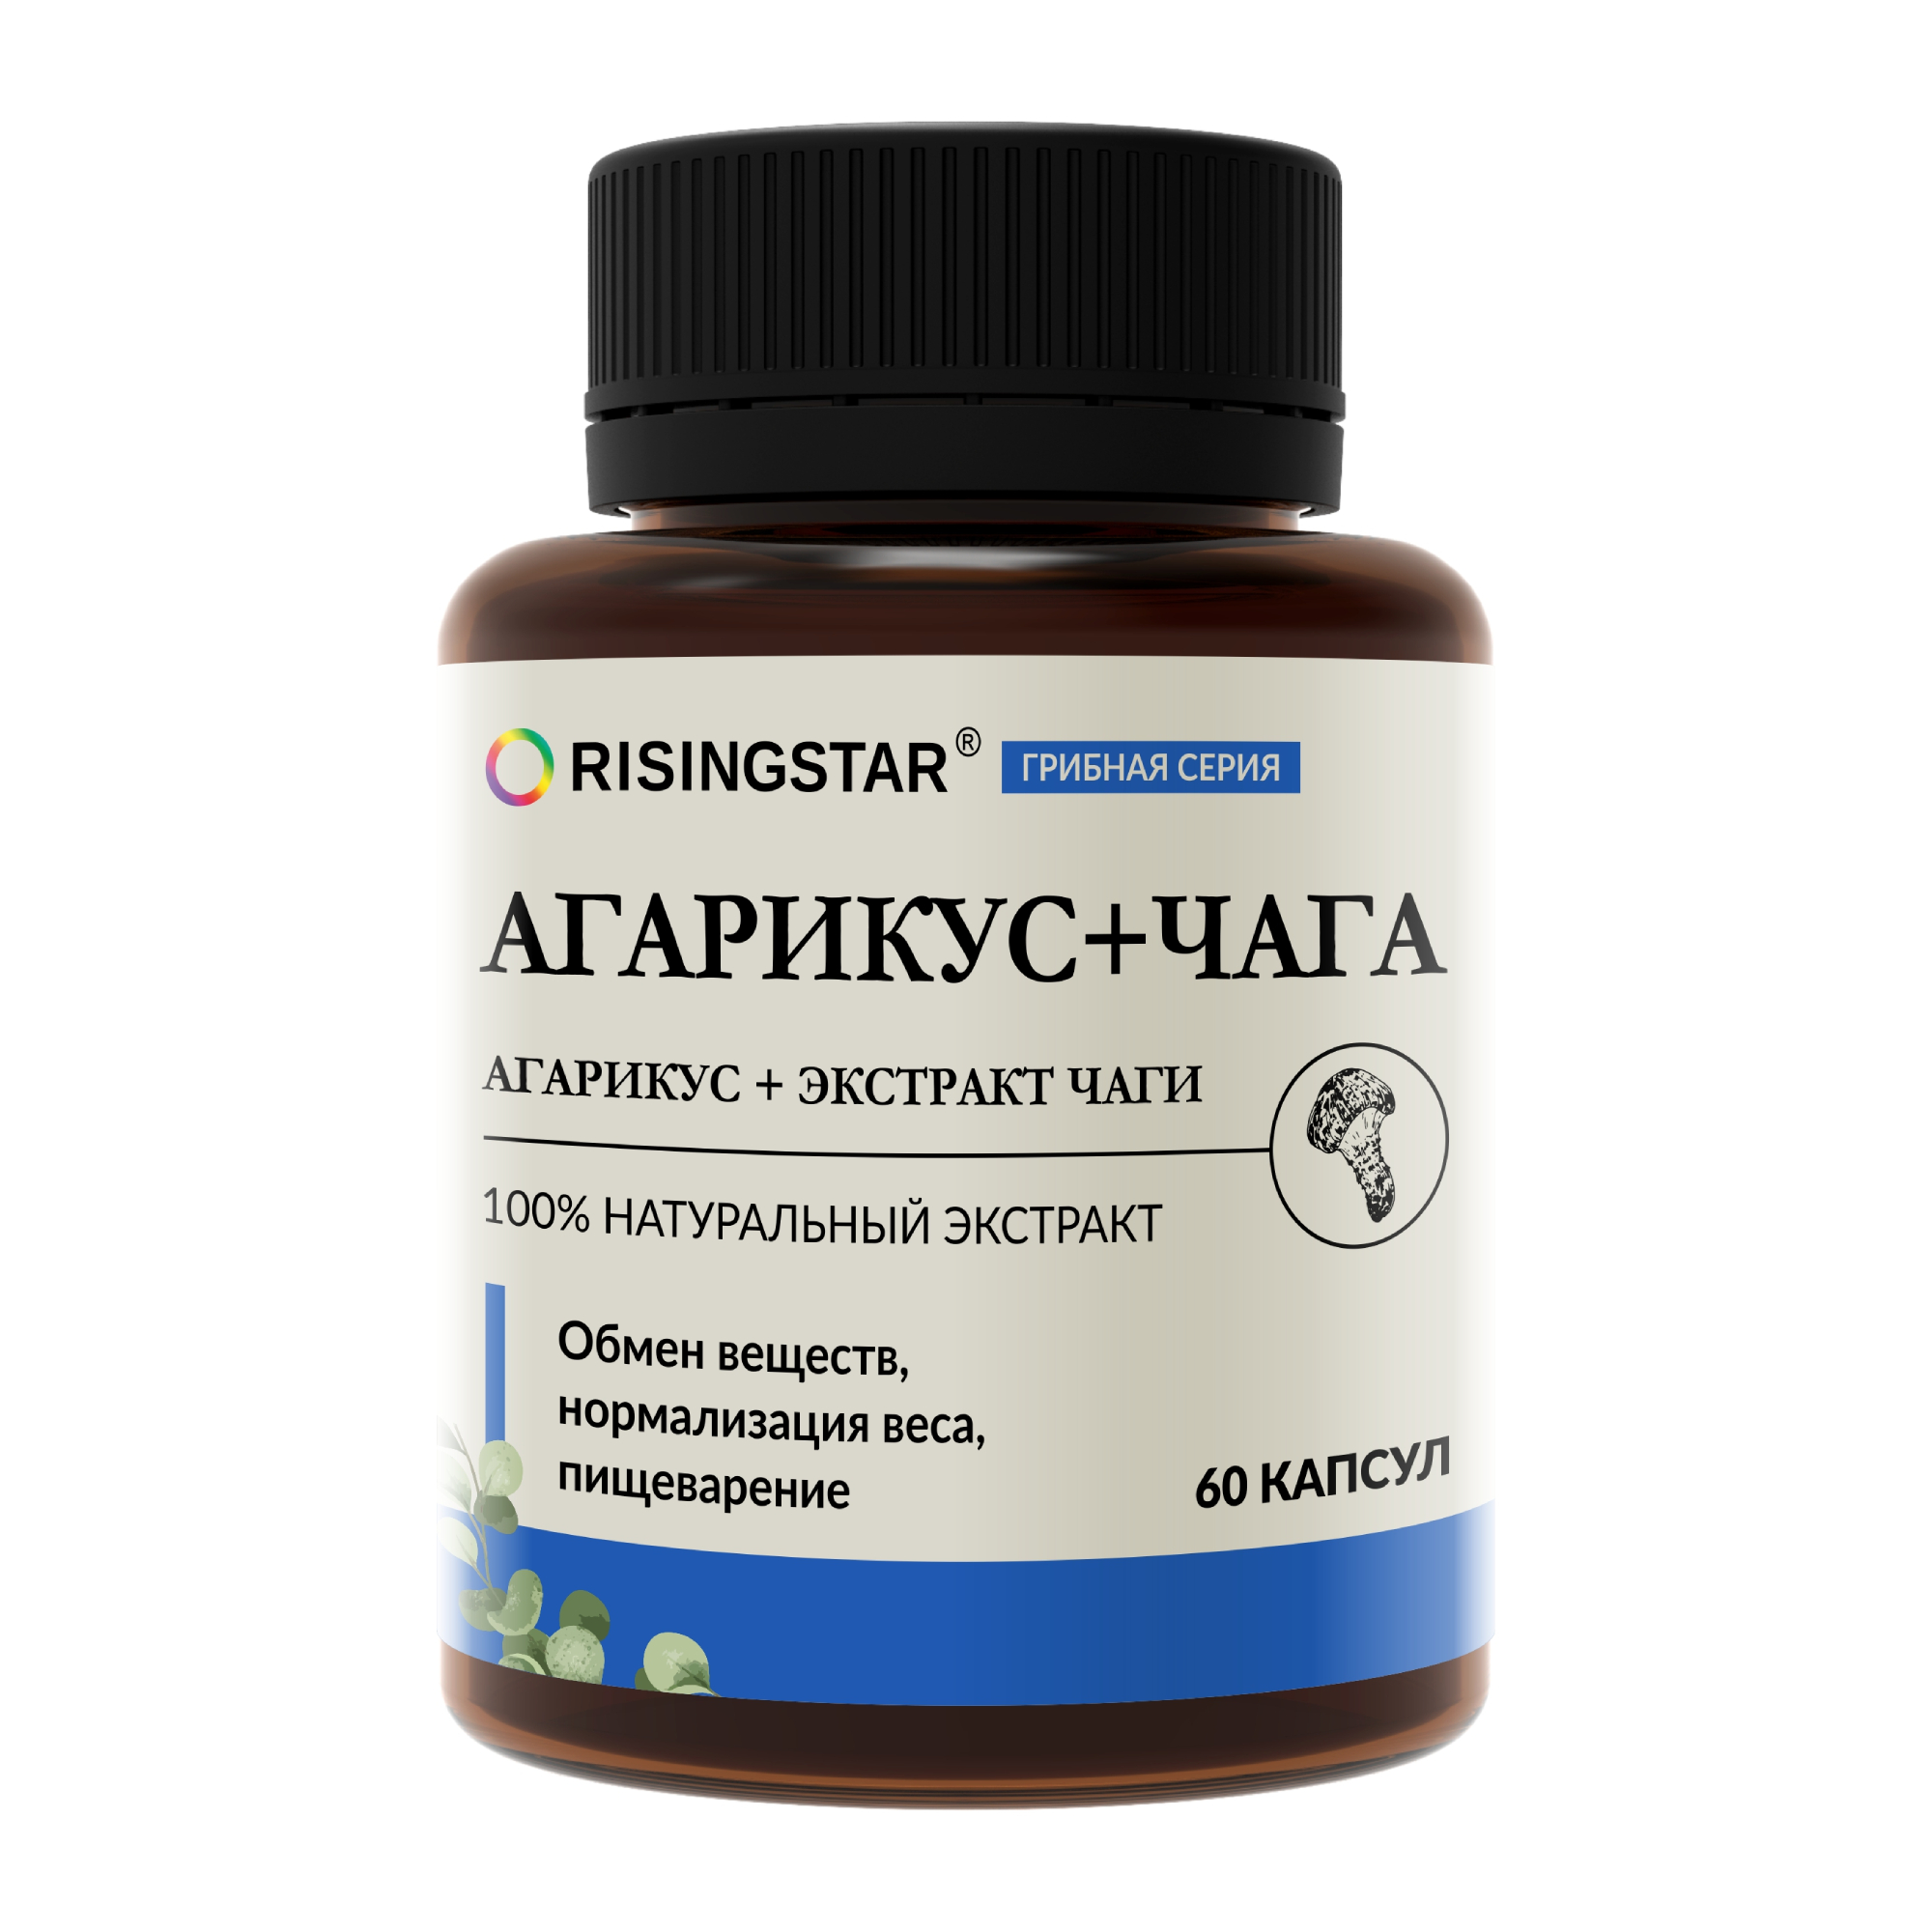 БАД Risingstar агарикус+чага с мумие 60 таблеток, 60 г грибная серия risingstar кордицепс с мумие 60 мл